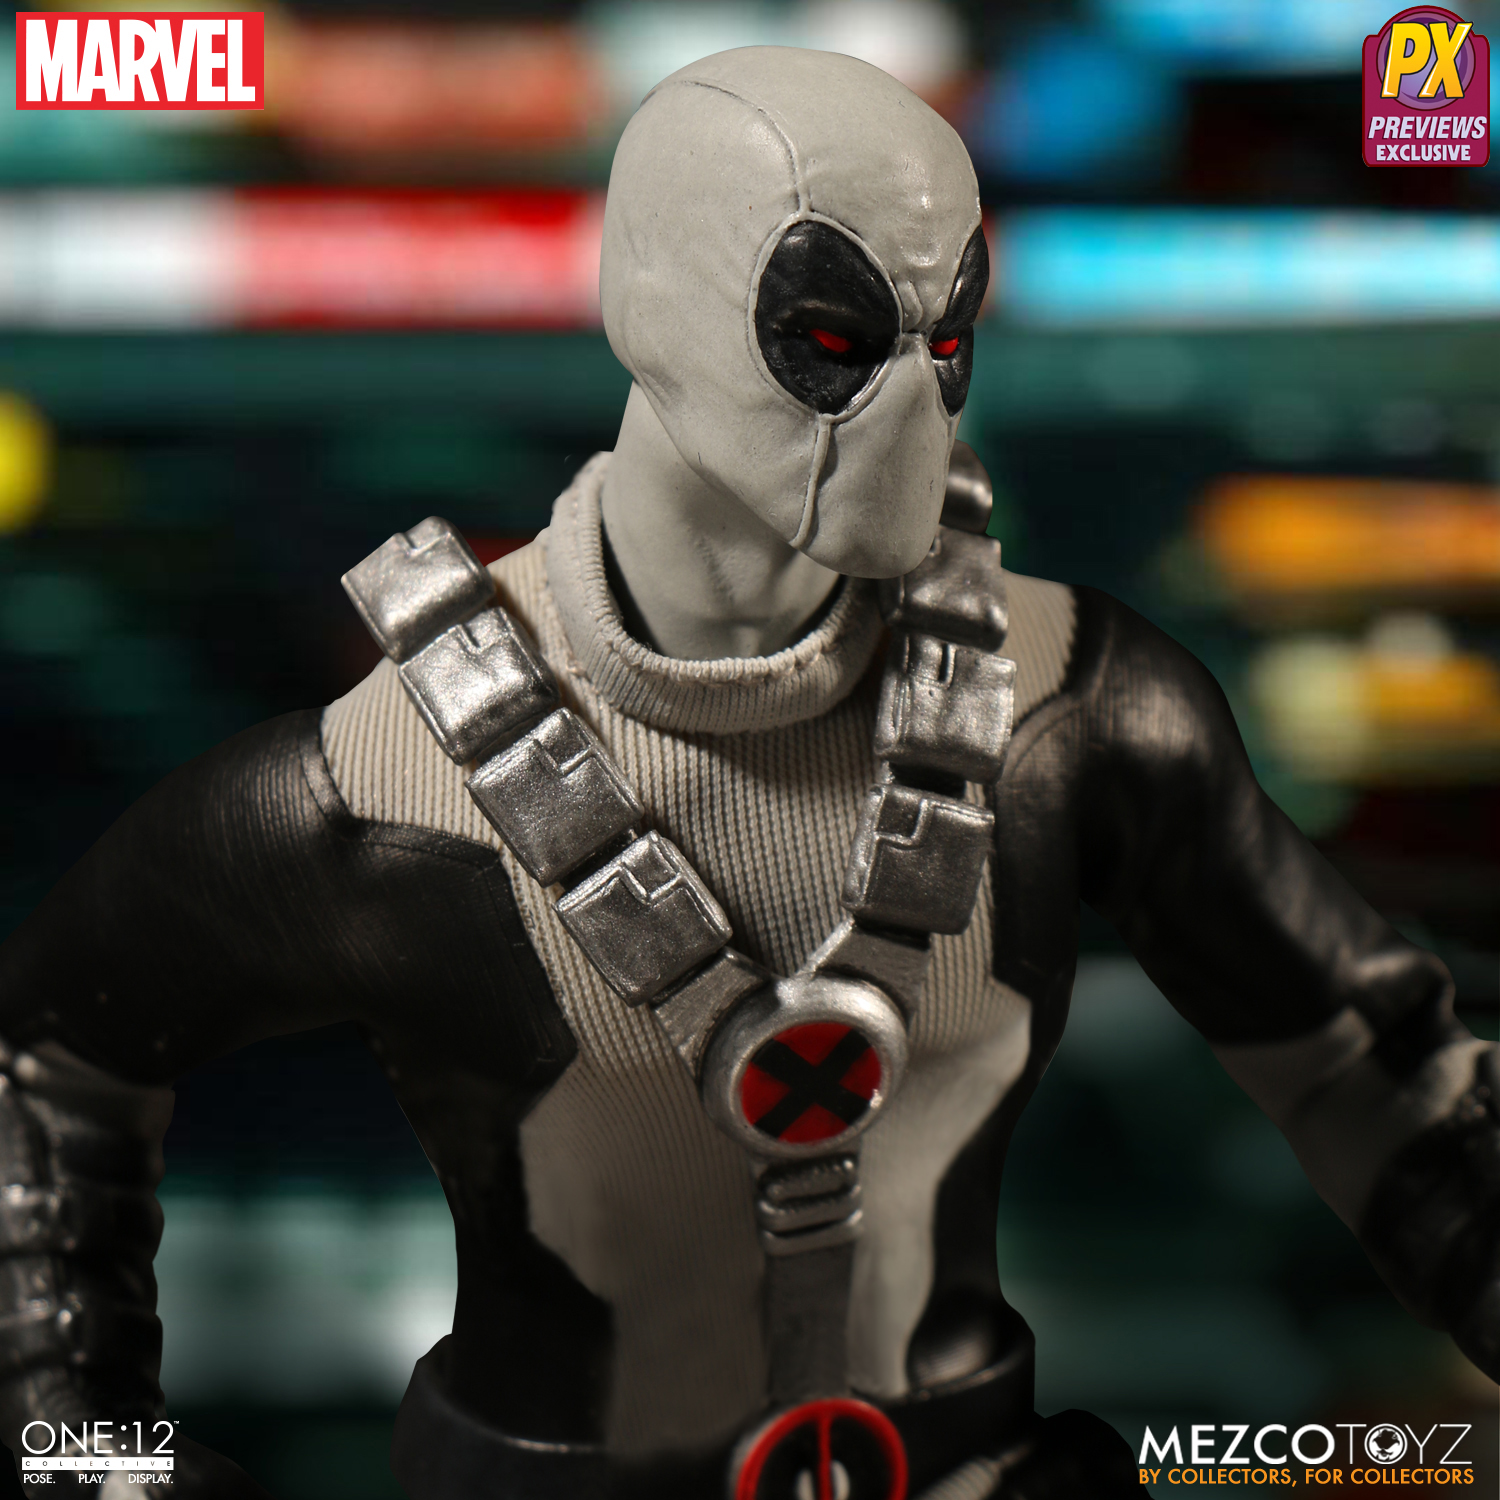 Mezco Toyz Collective One12 X-Force Deadpool PX Action Figure Previews Exclusive 